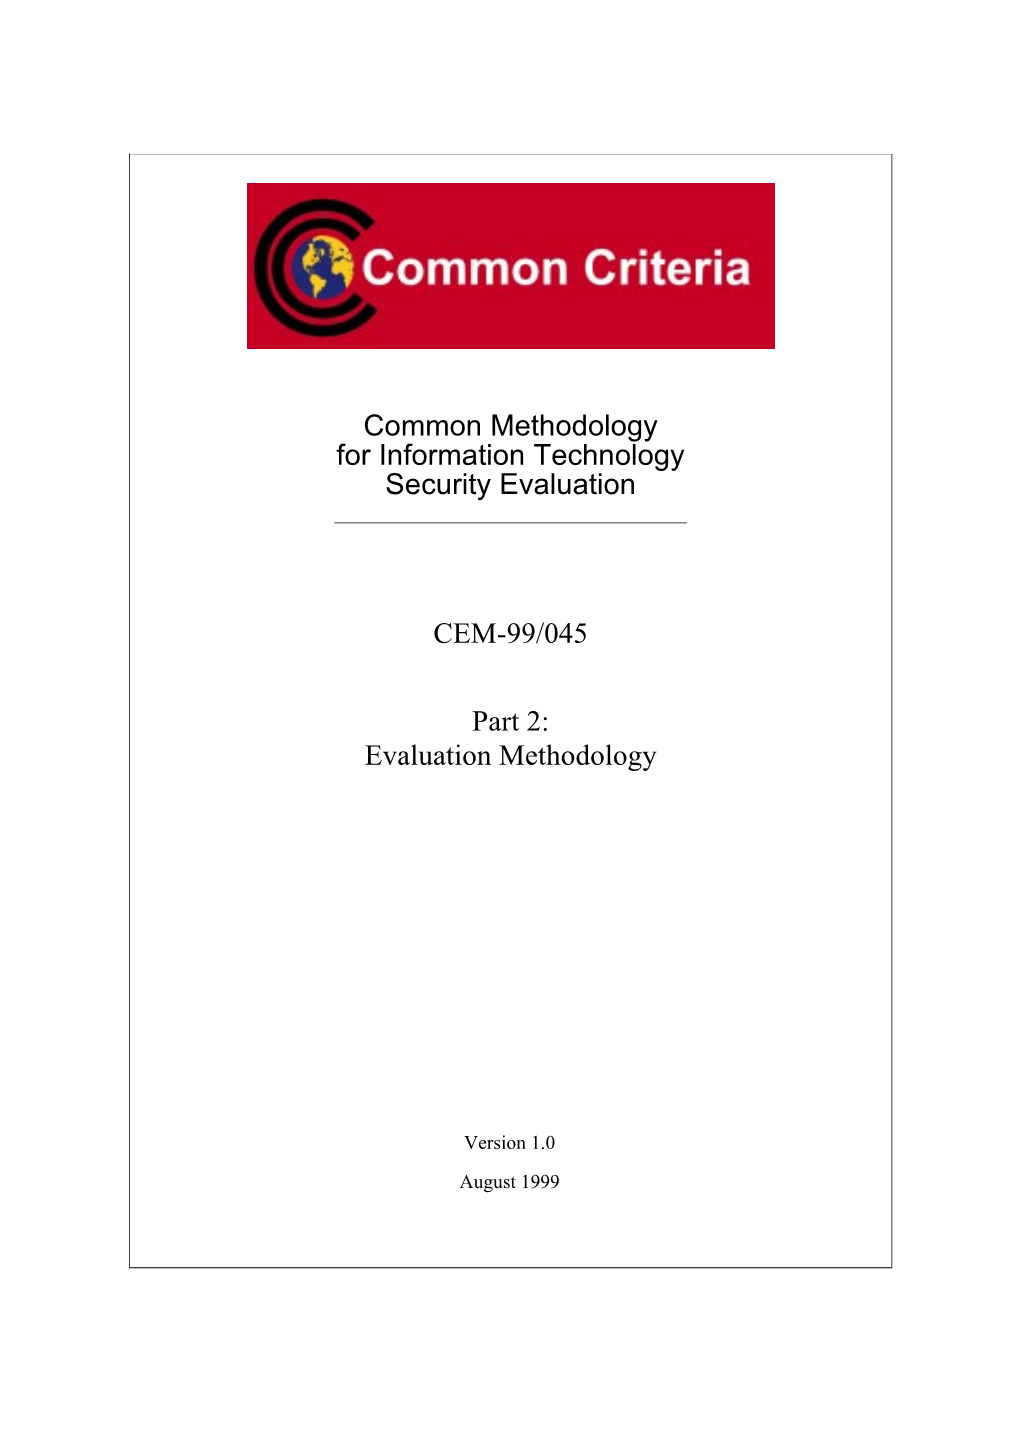 CEM-99/045 Part 2: Evaluation Methodology